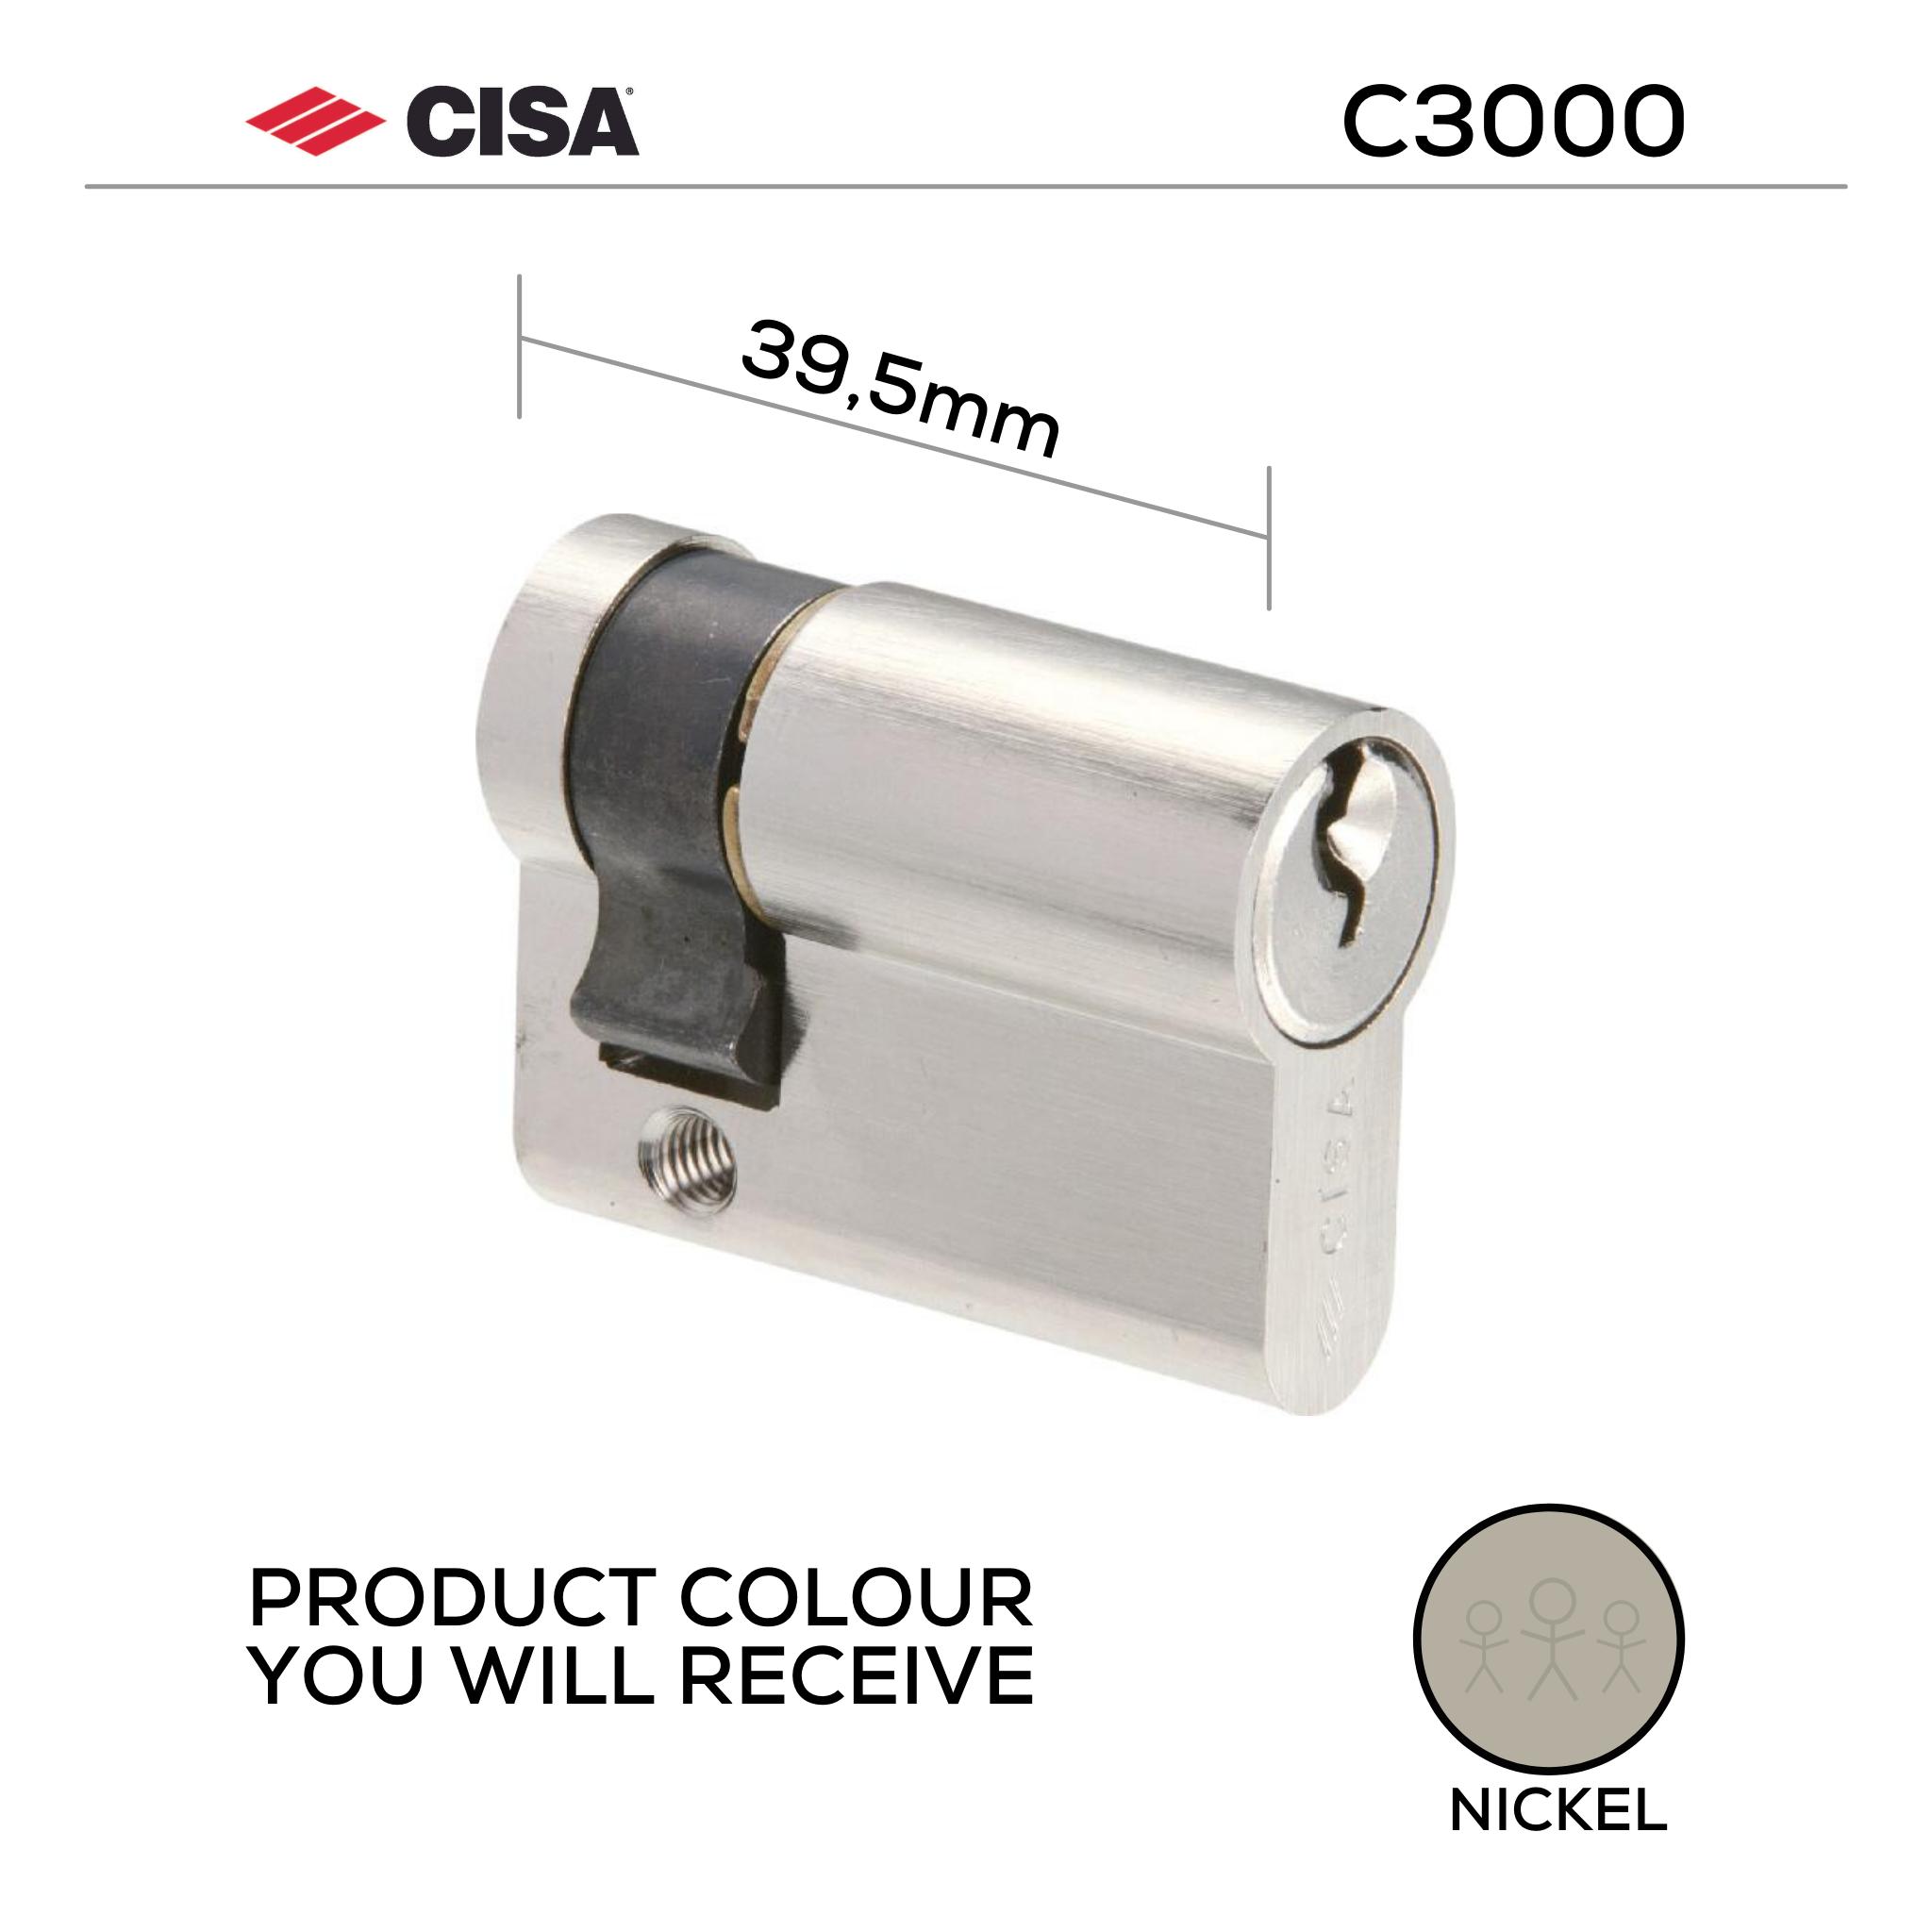 0N314-02-12-KD, 39.5mm - 29.5/10, Half (Single Cylinder), C3000, Key, Keyed to Differ (Standard), 3 Keys, 6 Pin, Nickel, CISA